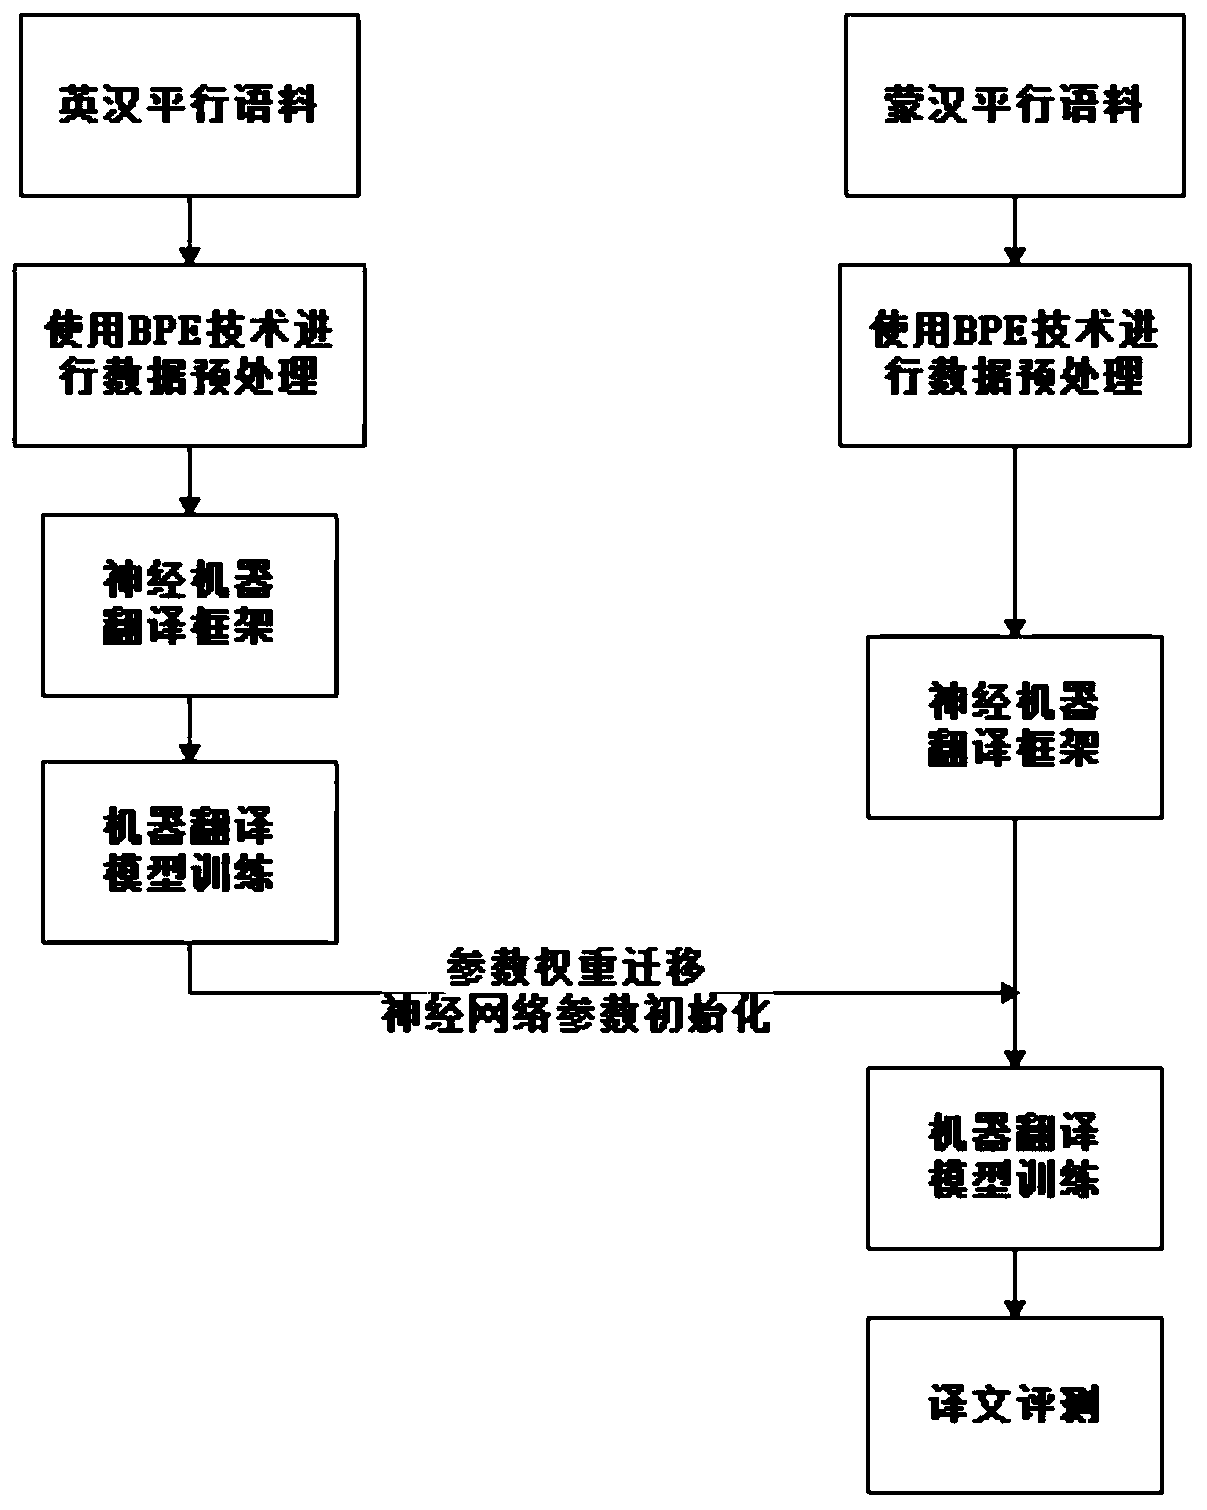 Mongolian-Chinese machine translation system based on byte pair coding technology